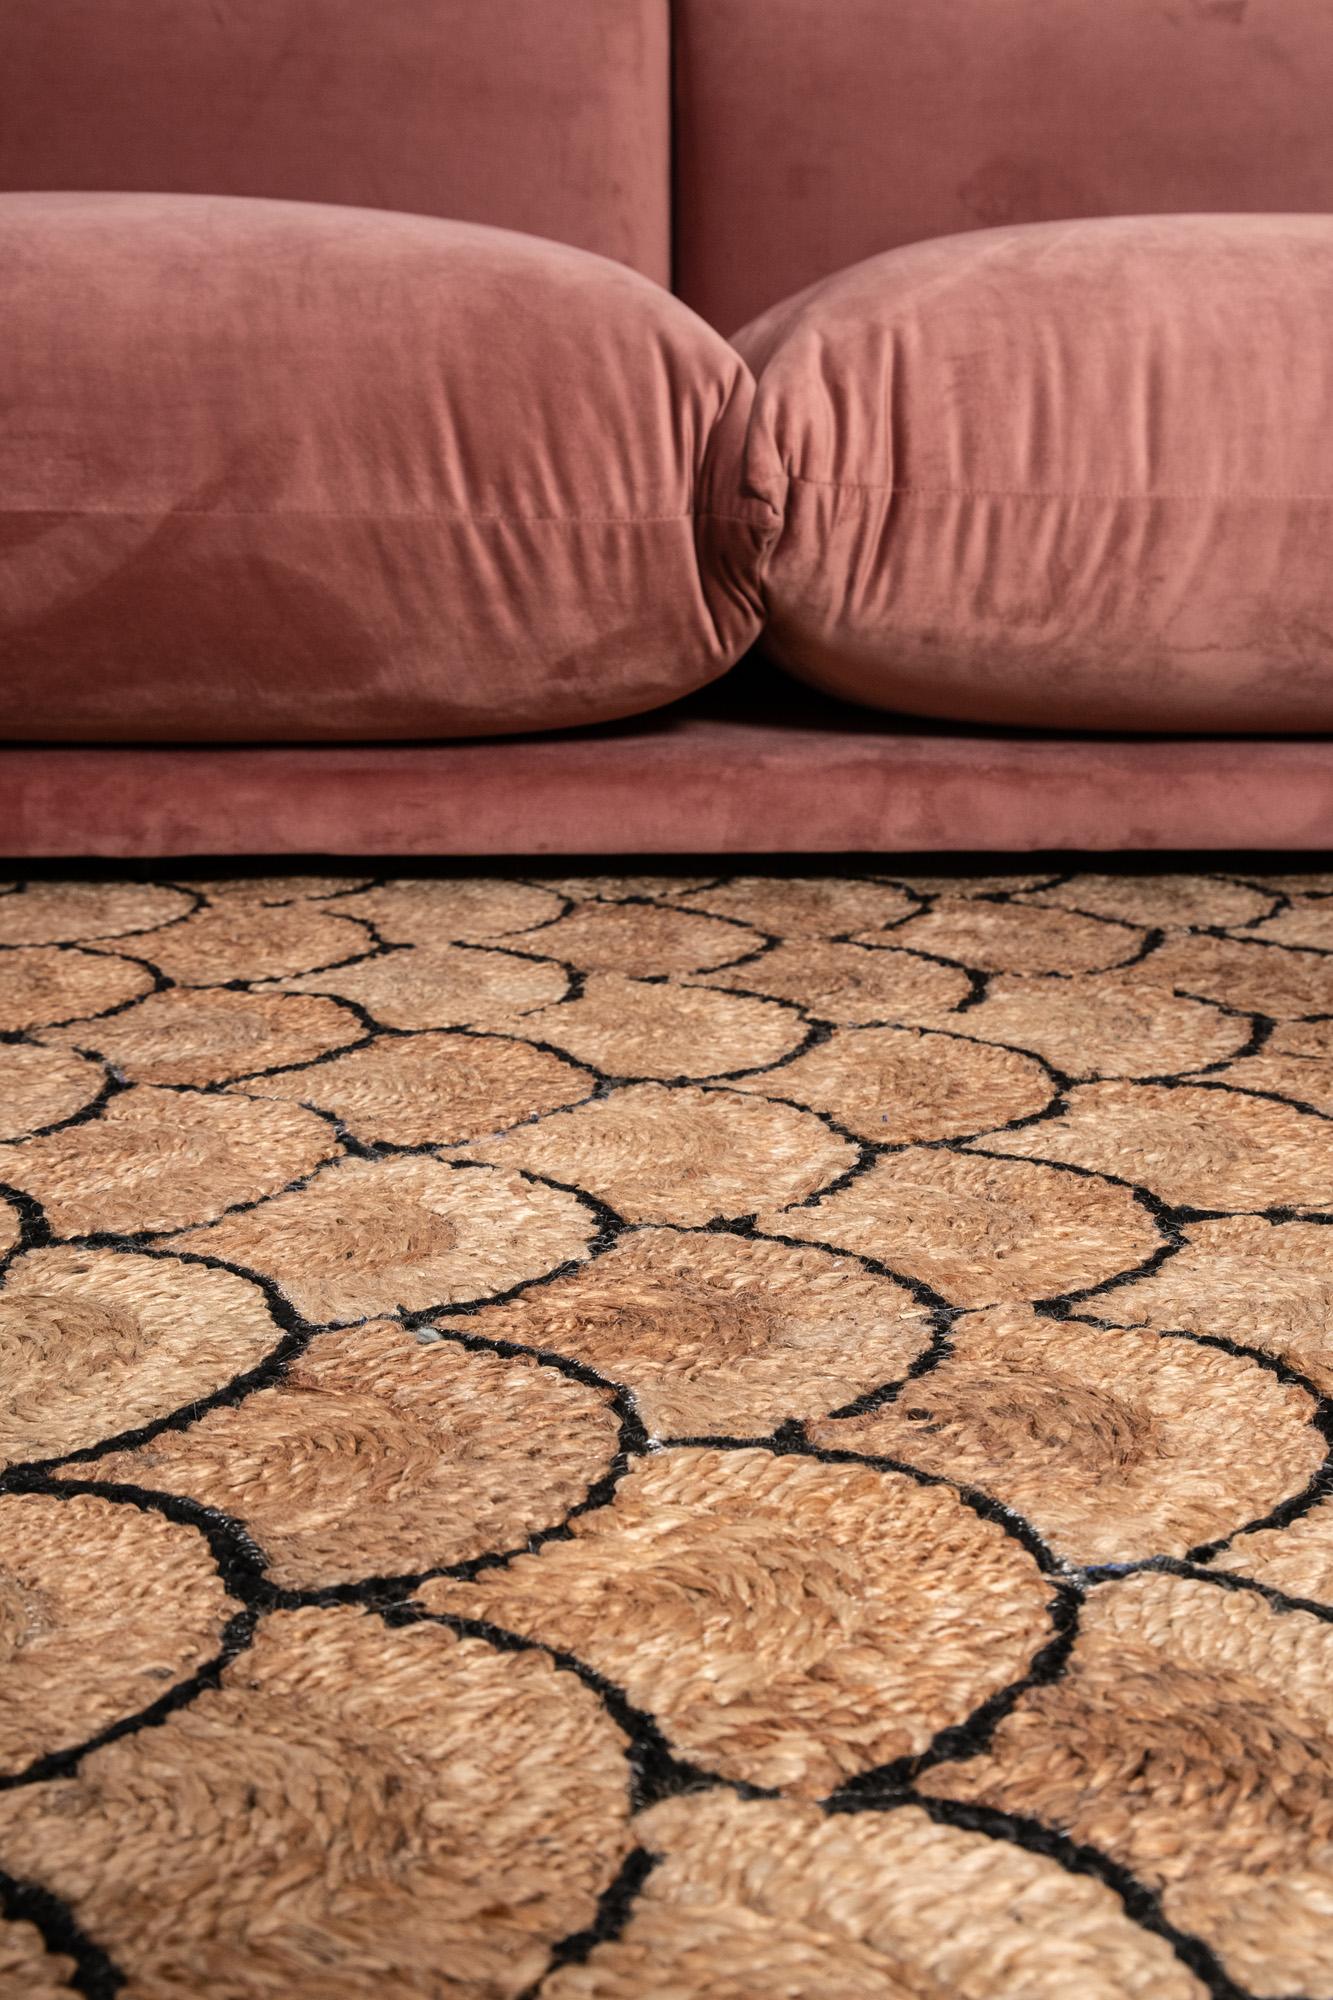 Modern Machine Stitched Jute Carpet Rug Natural Brown & Black Venus For Sale 6